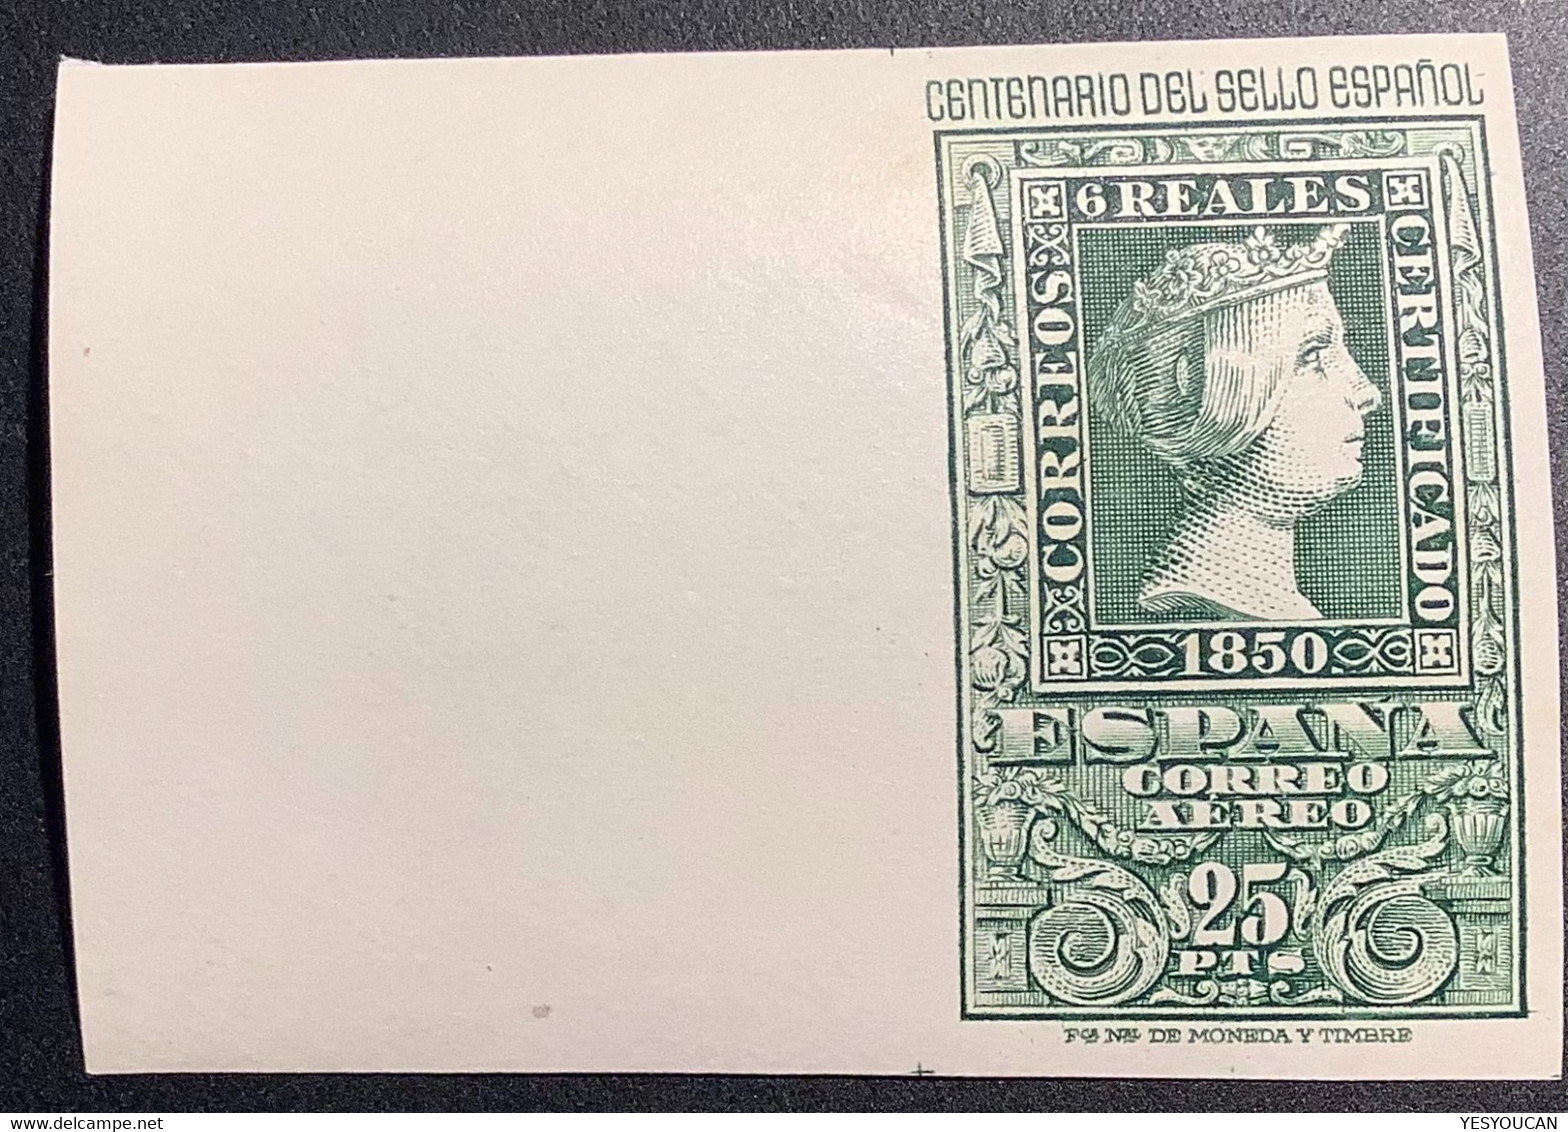 Spain 1950 Ed. 1075-1082 MNH** XF Centenario del sello Español set (España stamps on stamp centenary Espagne